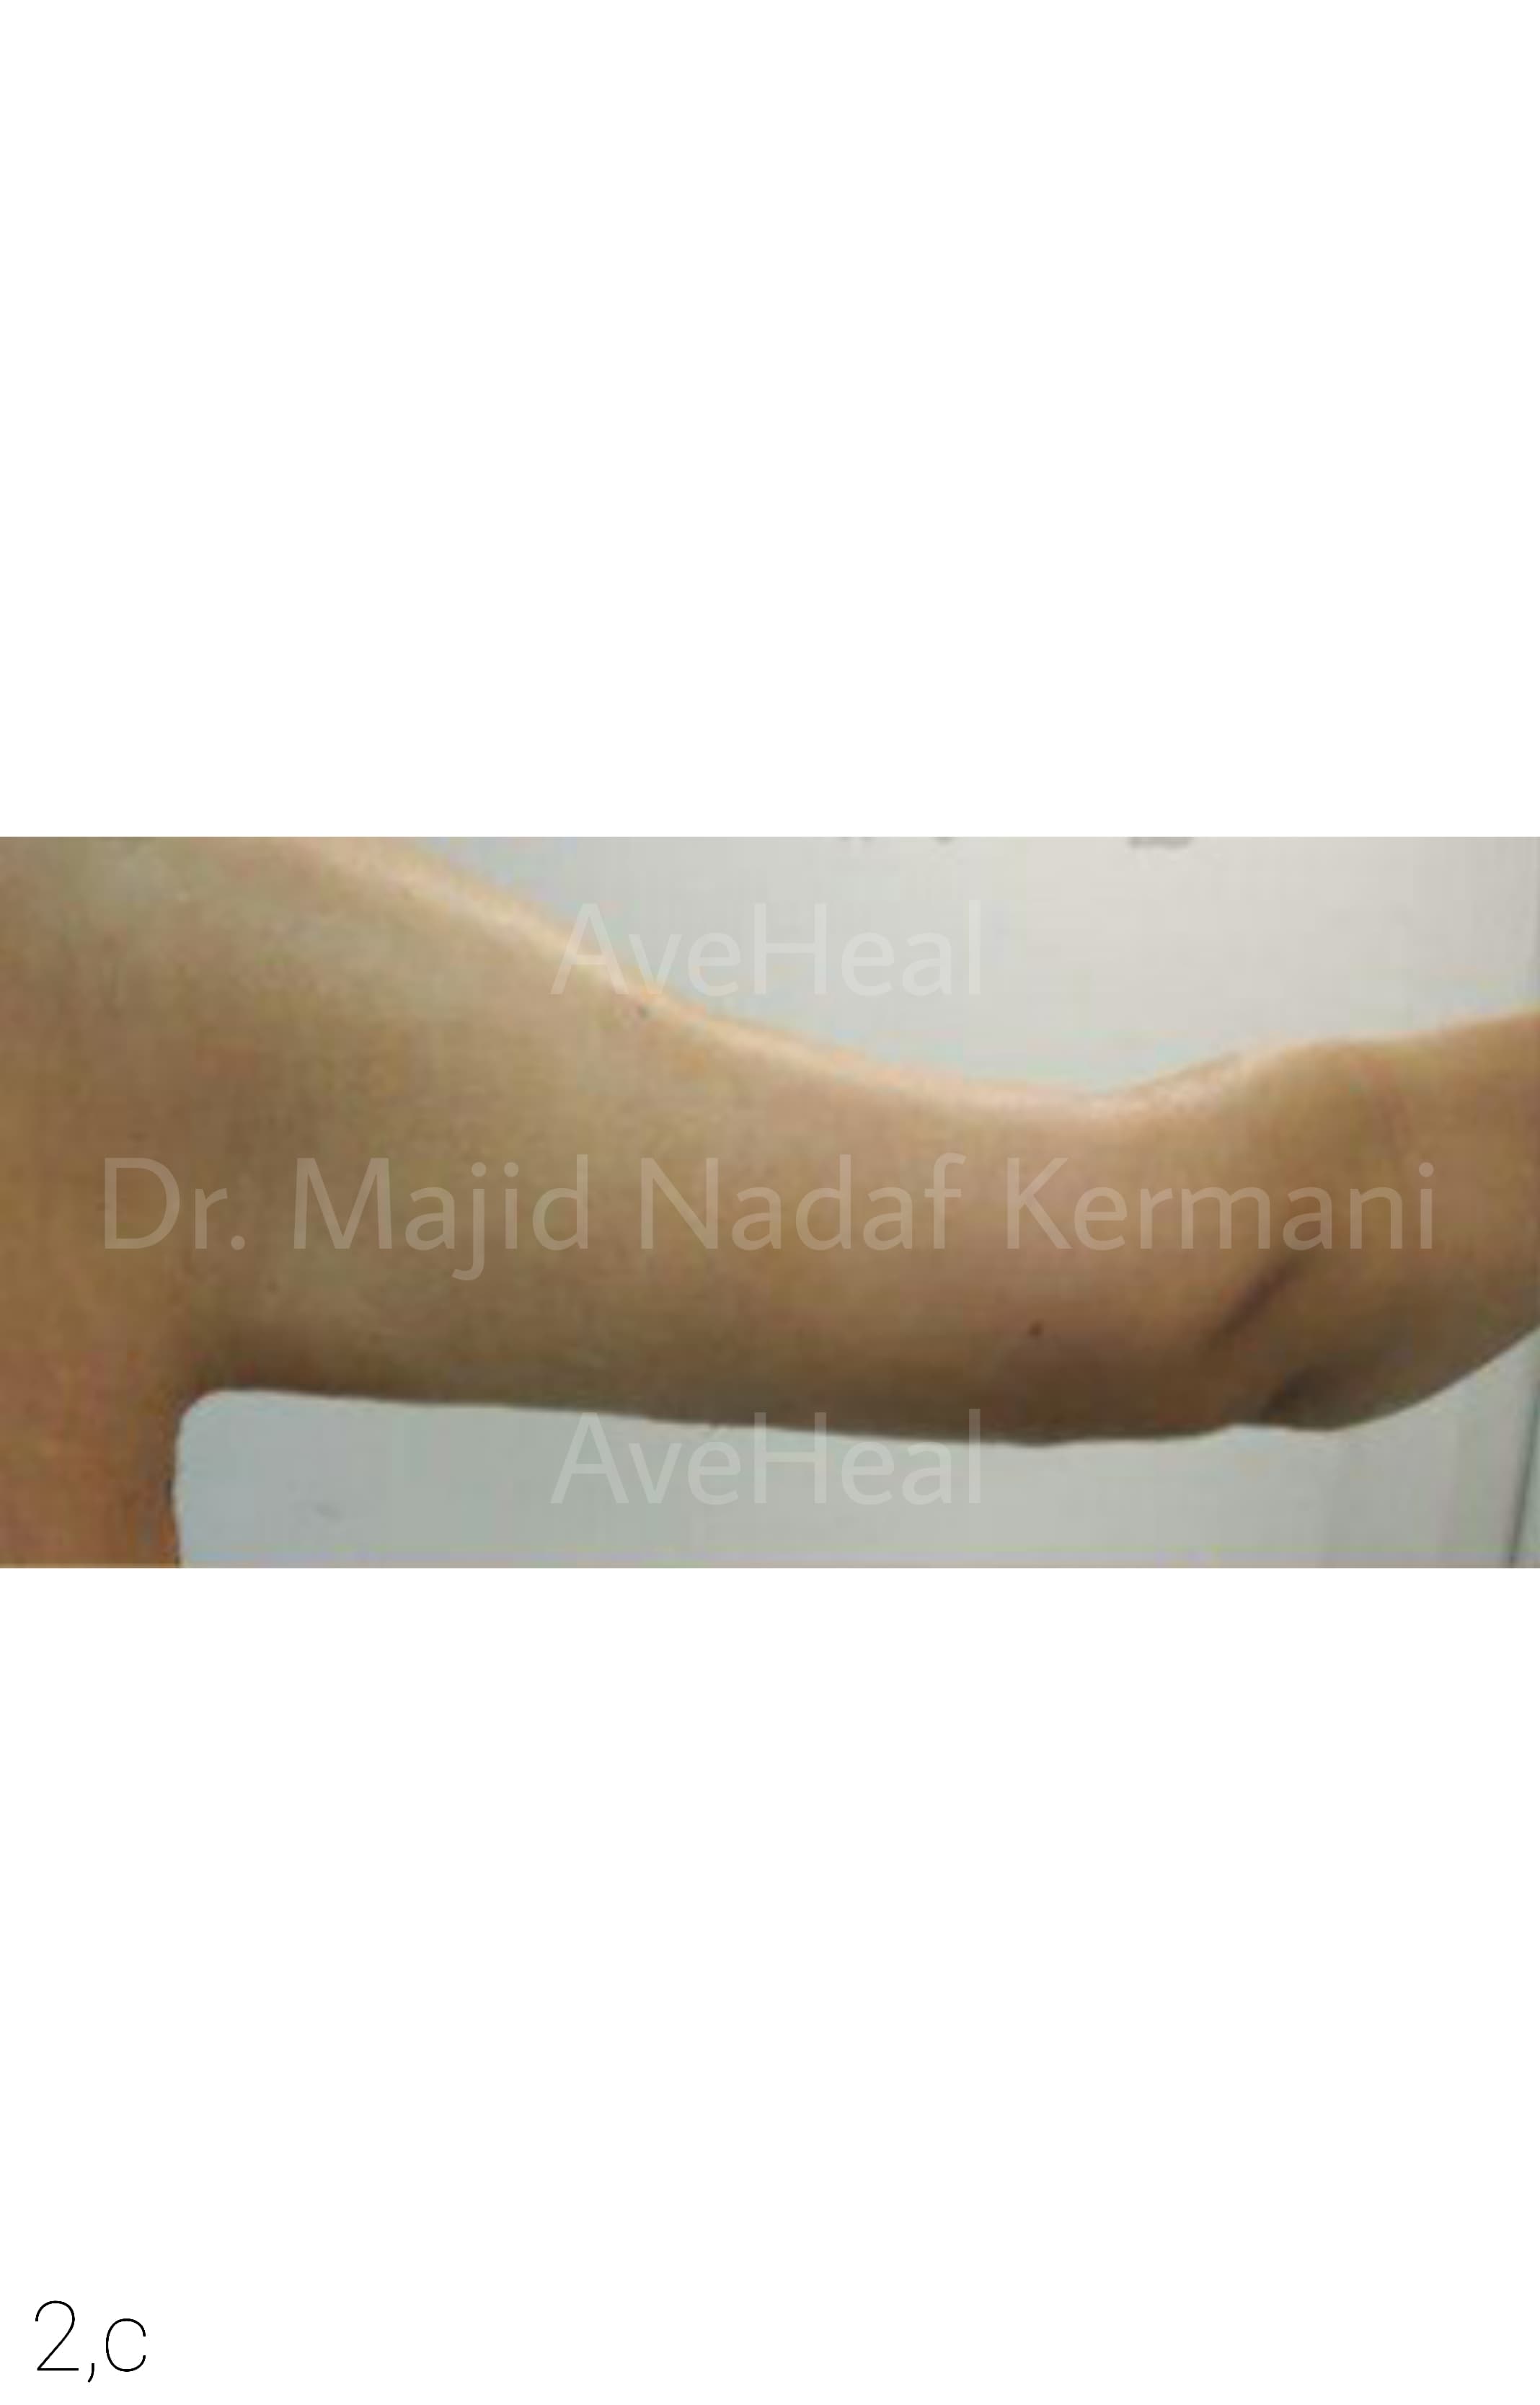 after-arm-lift-dr-majid-nadaf-kermani